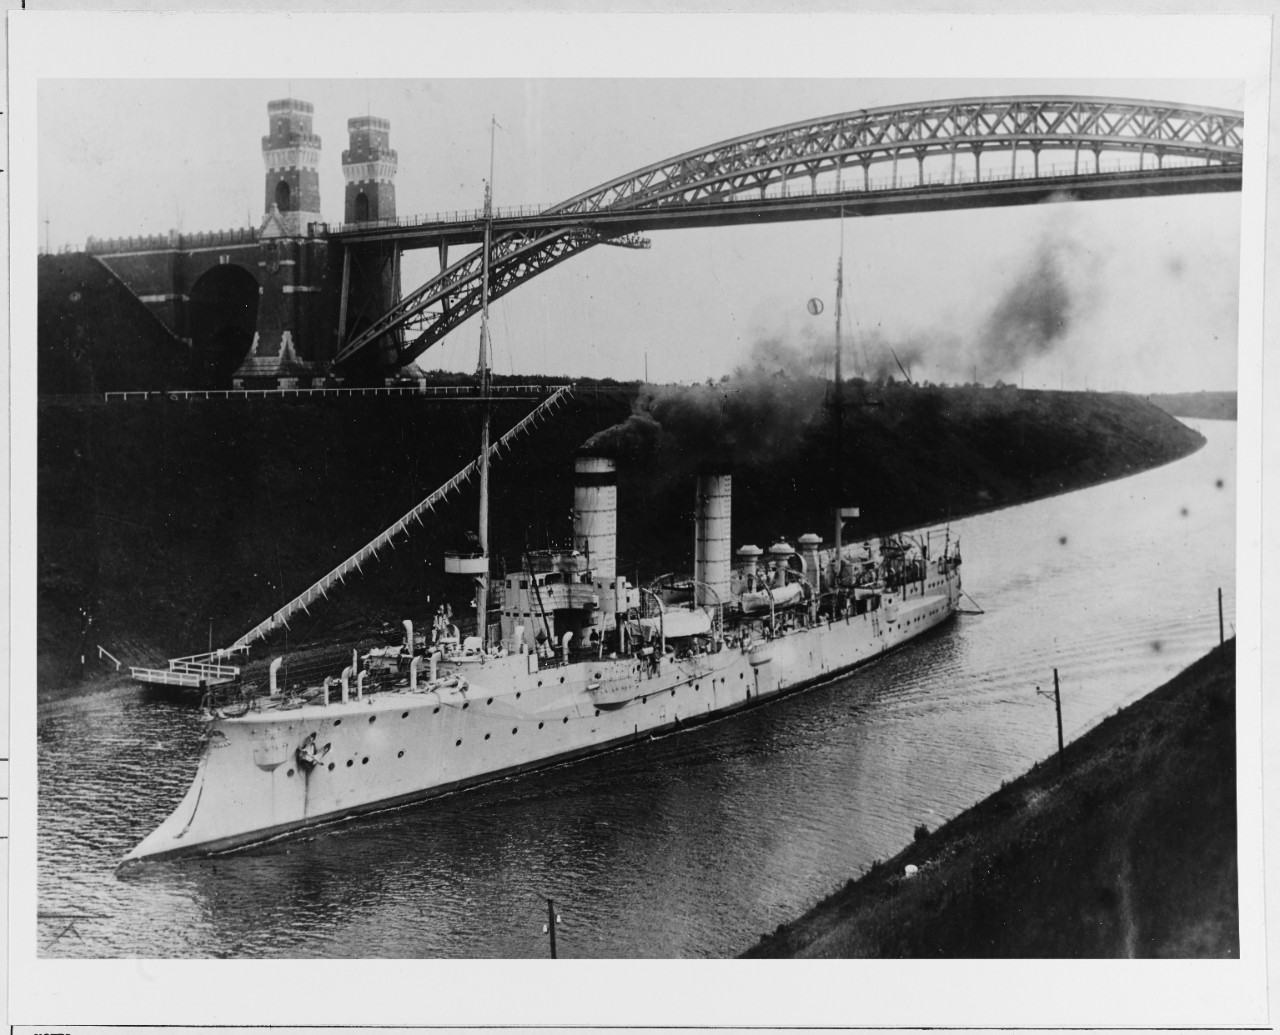 SMS ARCONA (German light cruiser, 1902)